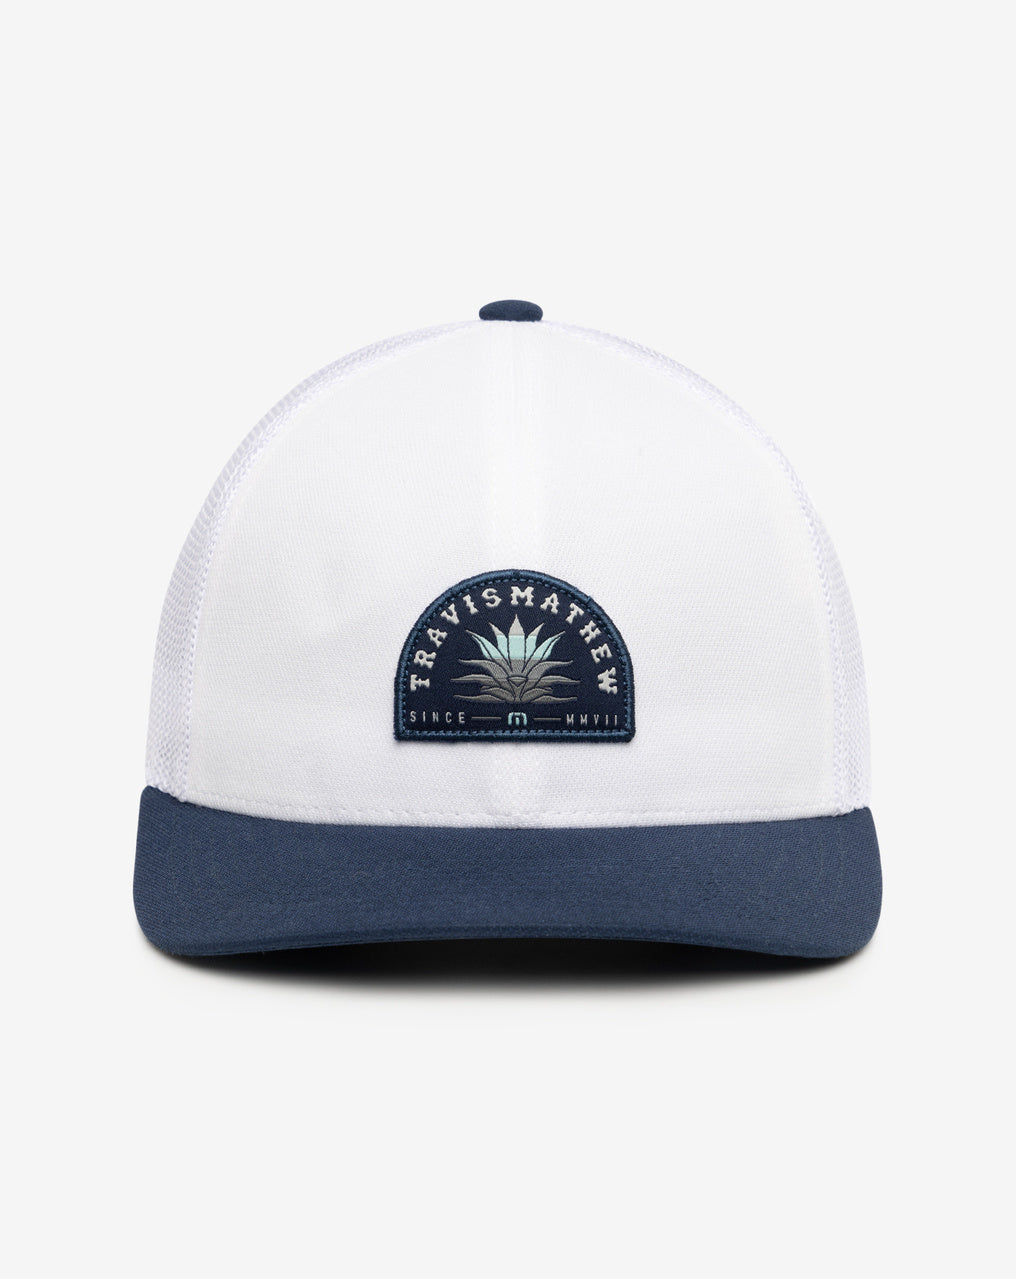 TravisMathew Torro Snapback Hat (Non-Current)